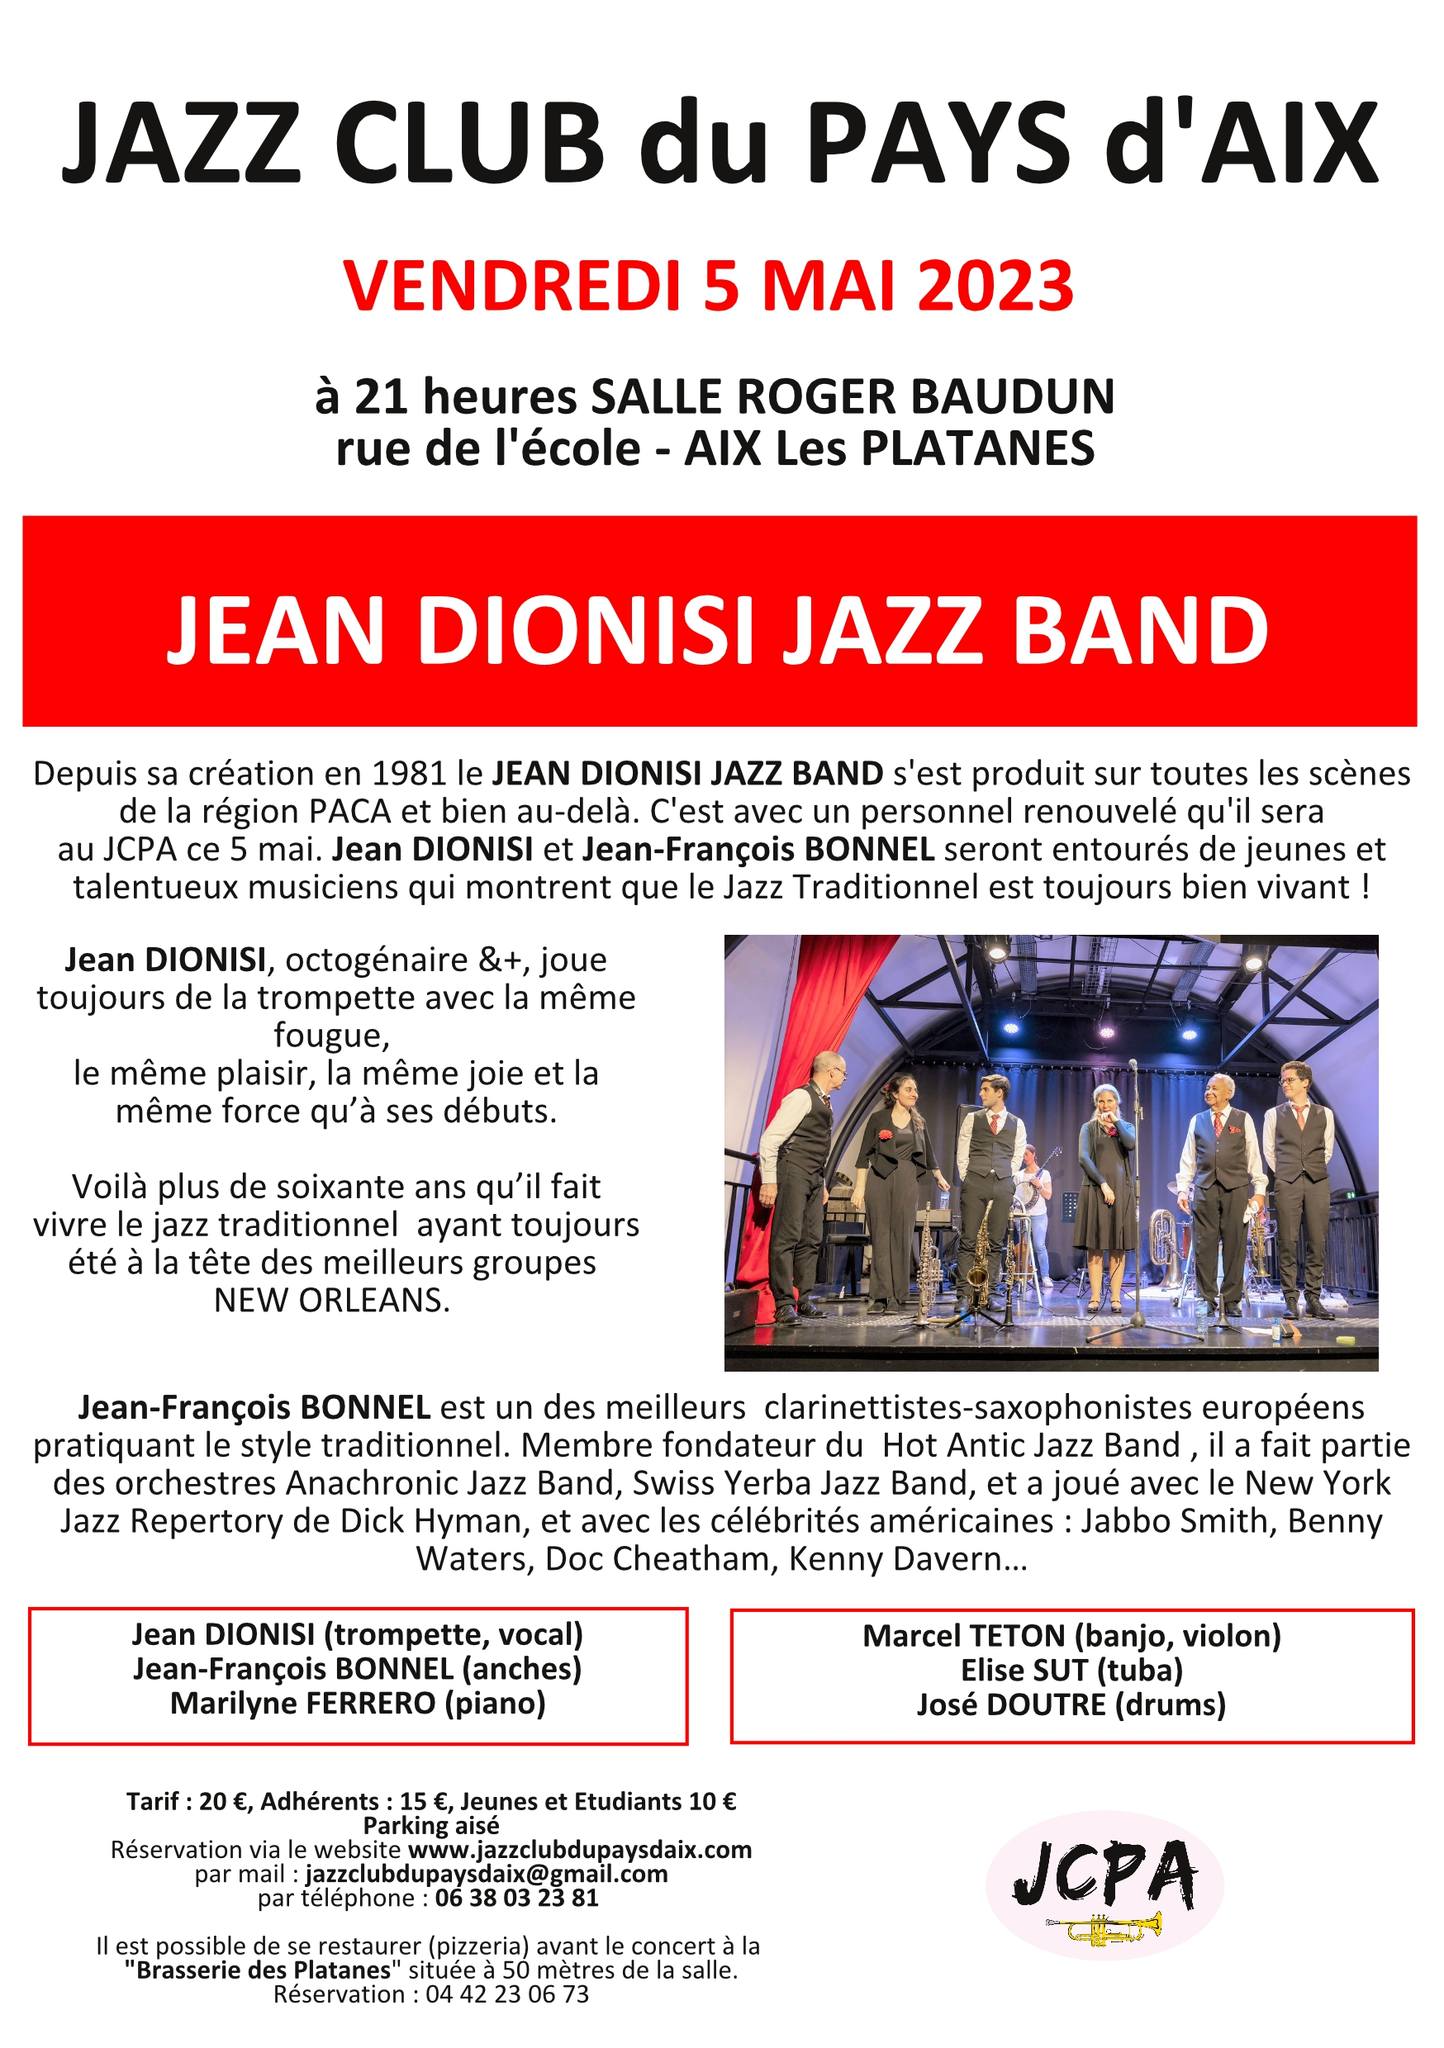 Jean dionisi Jazz band 050523 